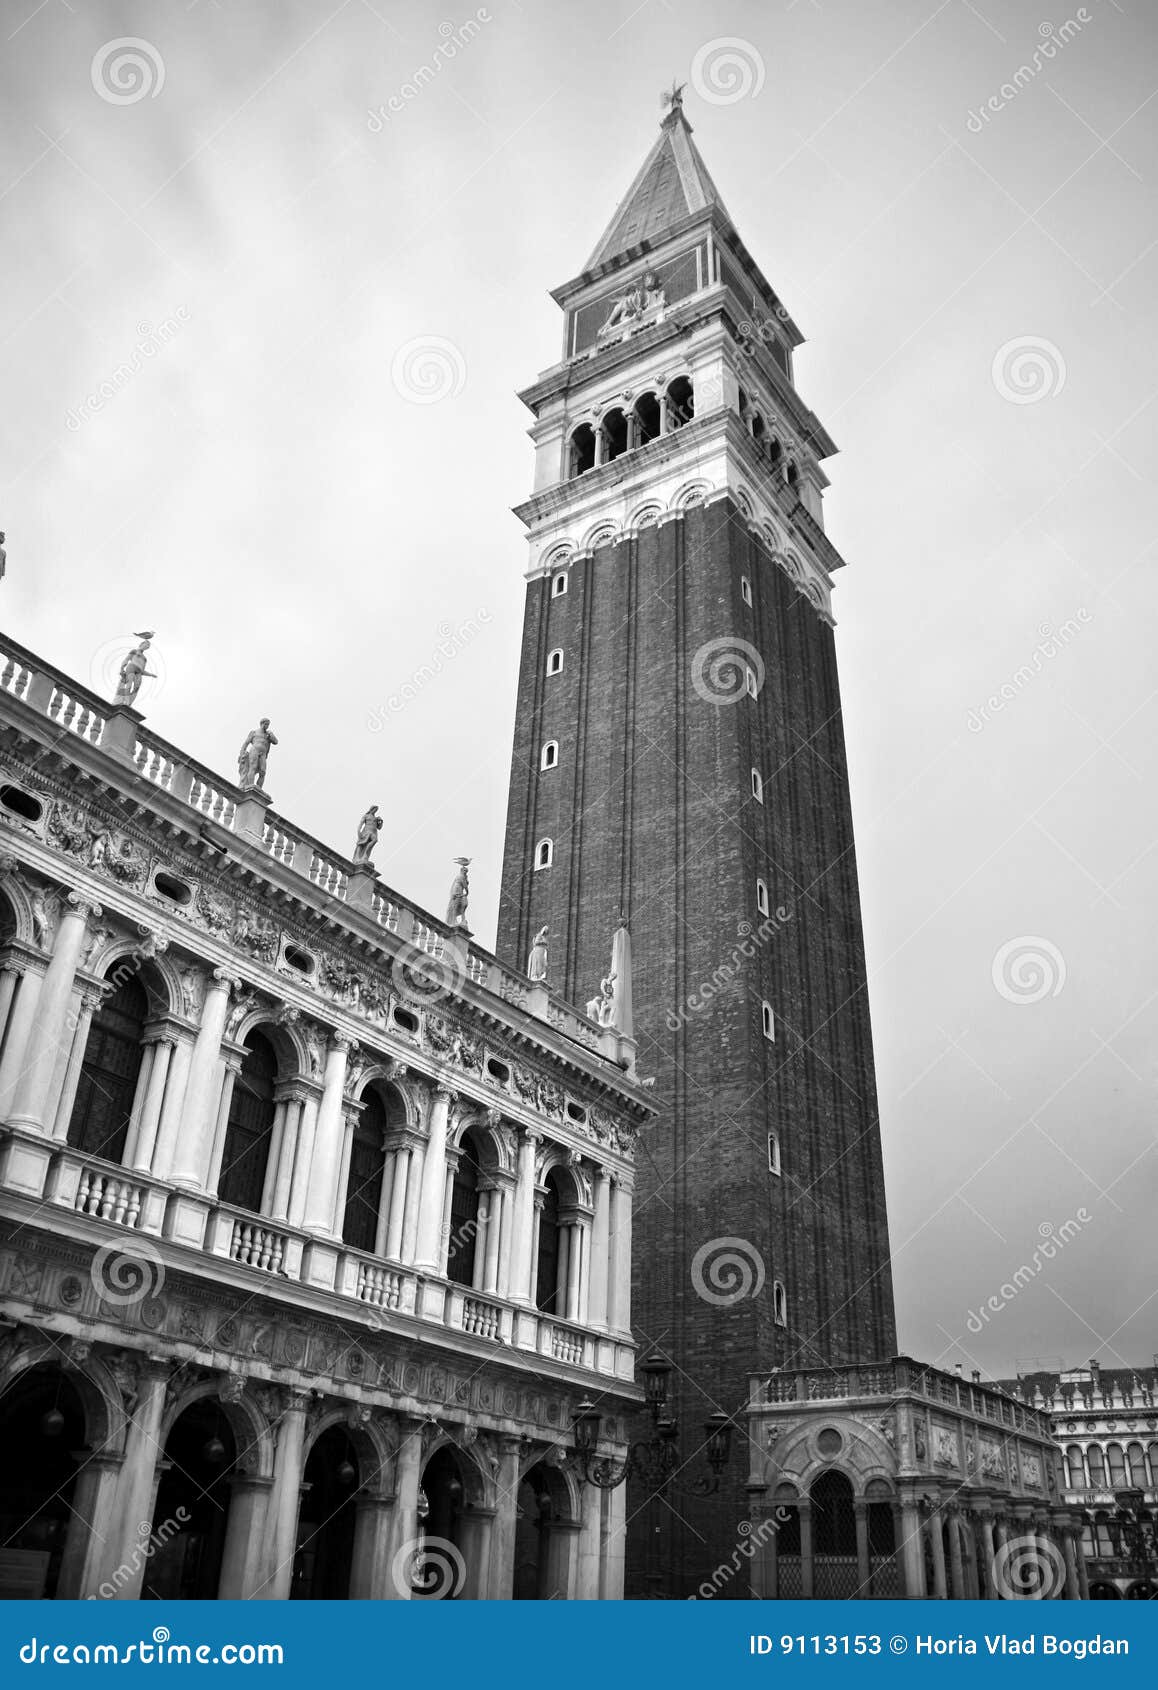 st mark's campanile - venice, italy